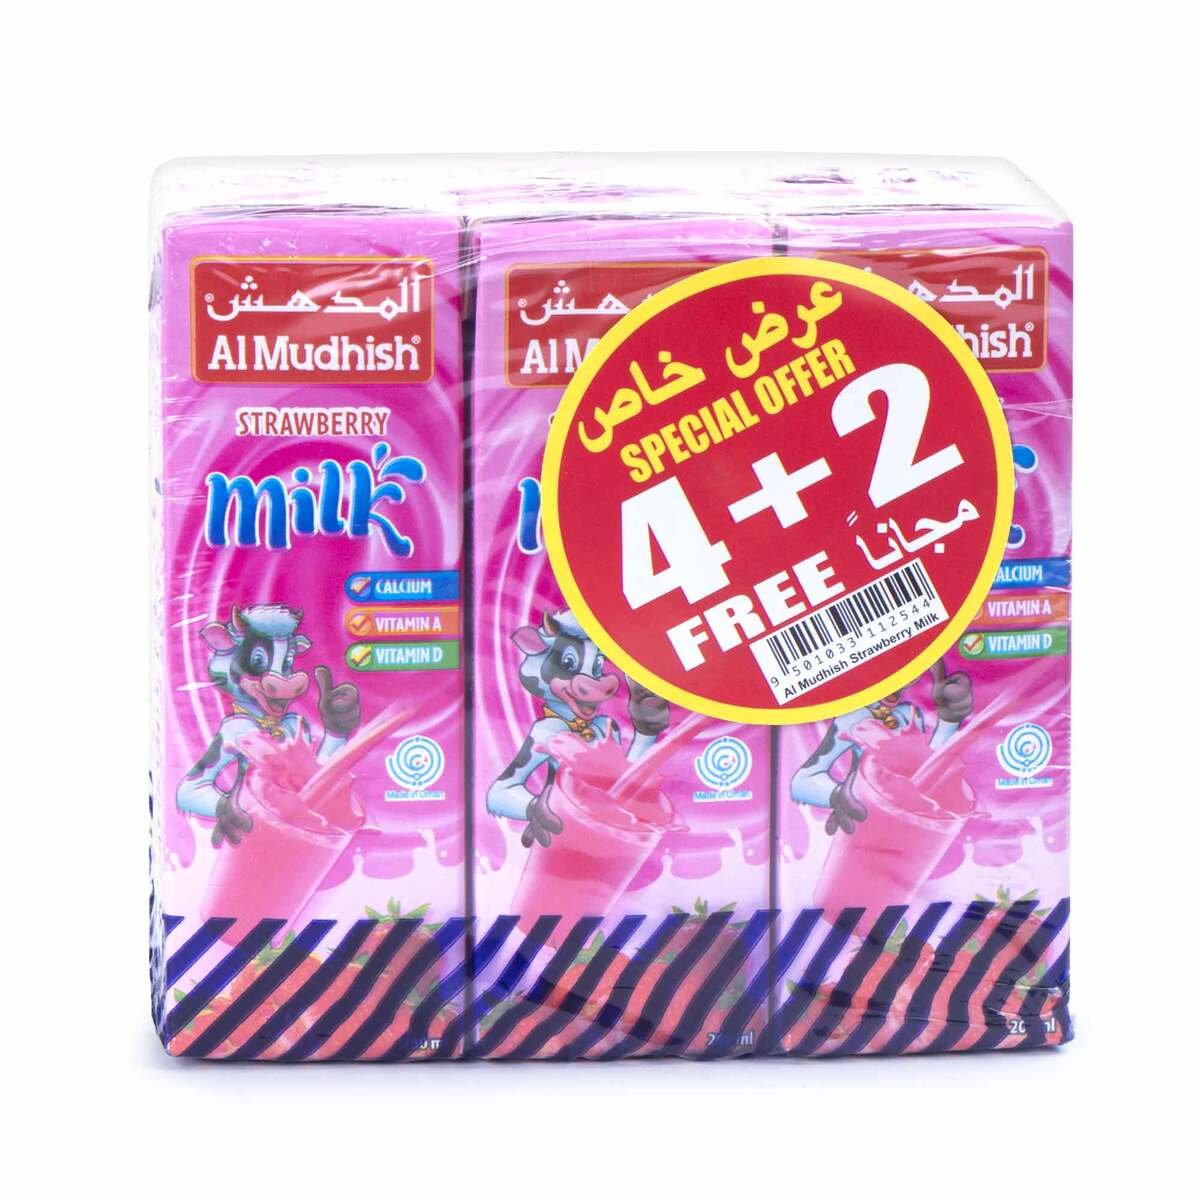 Al Mudhish Strawberry Flavoured Milk 6 x 200ml